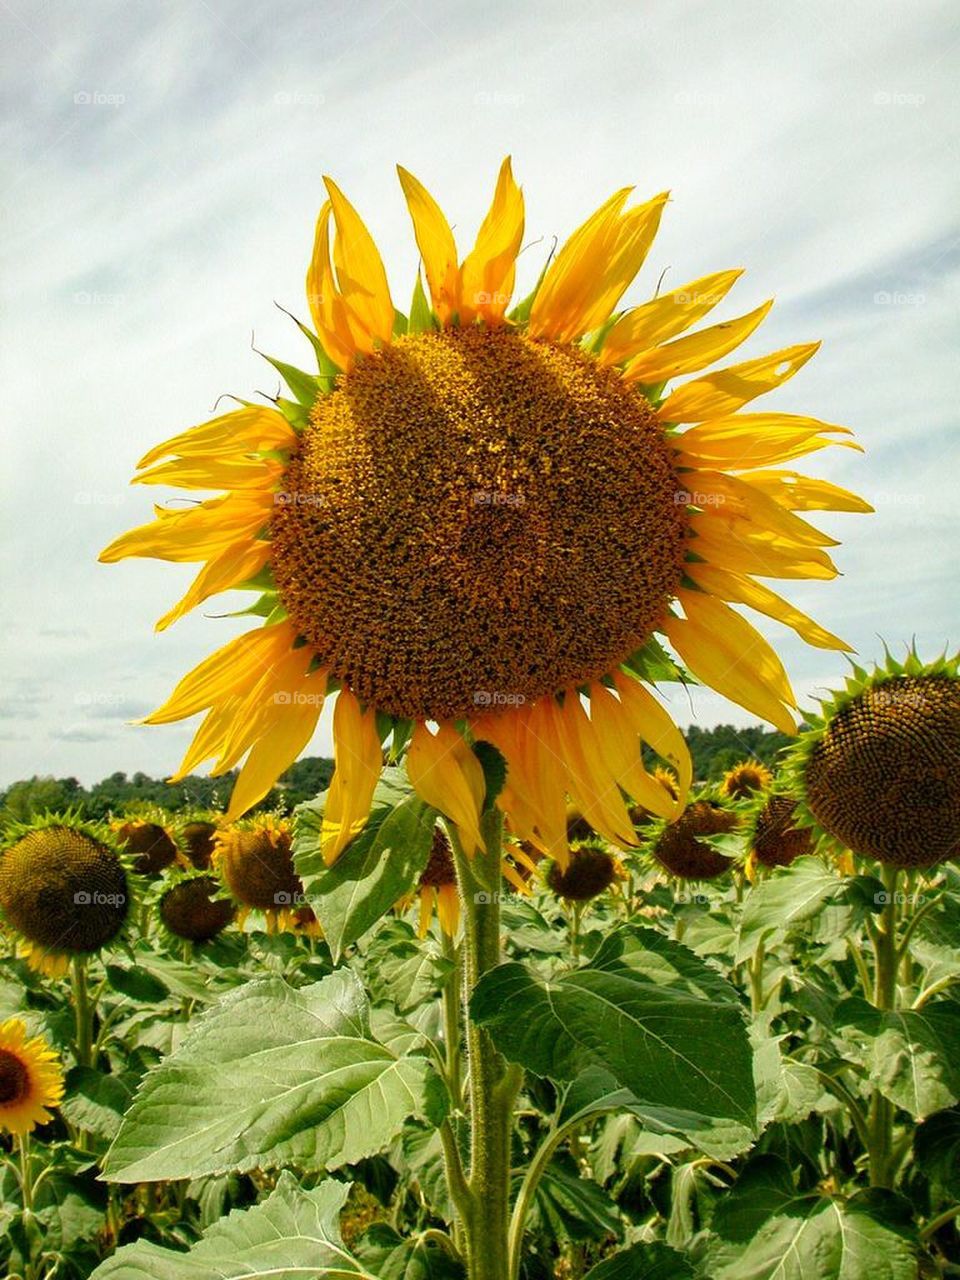 Aging sunflower